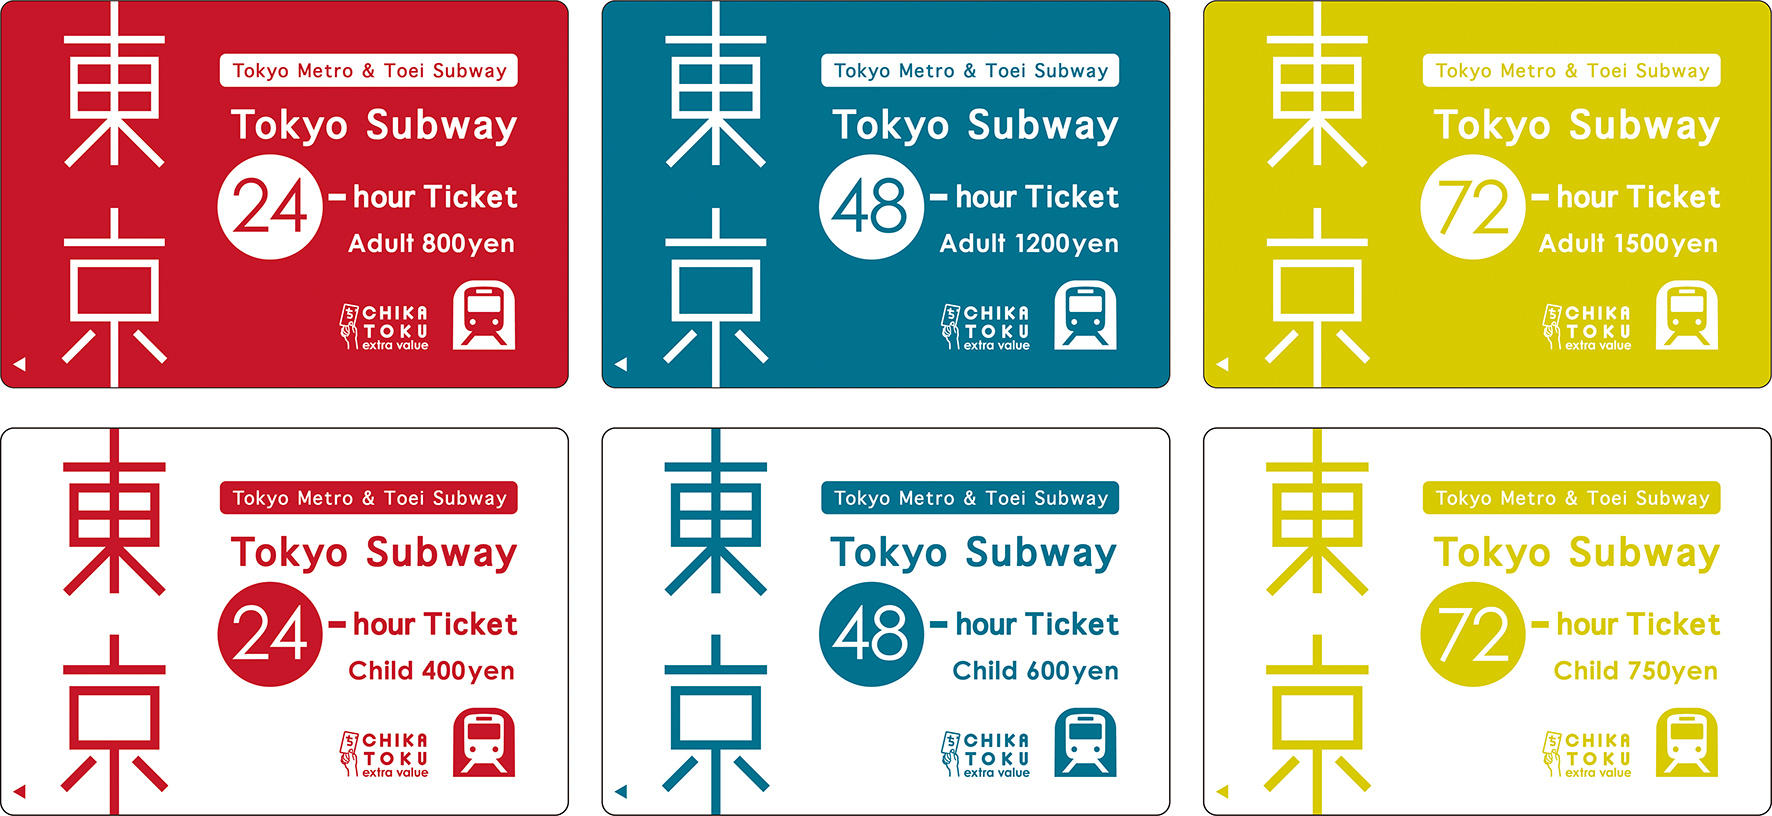 Starting Friday, January 11, Tokyo Metro will offer 